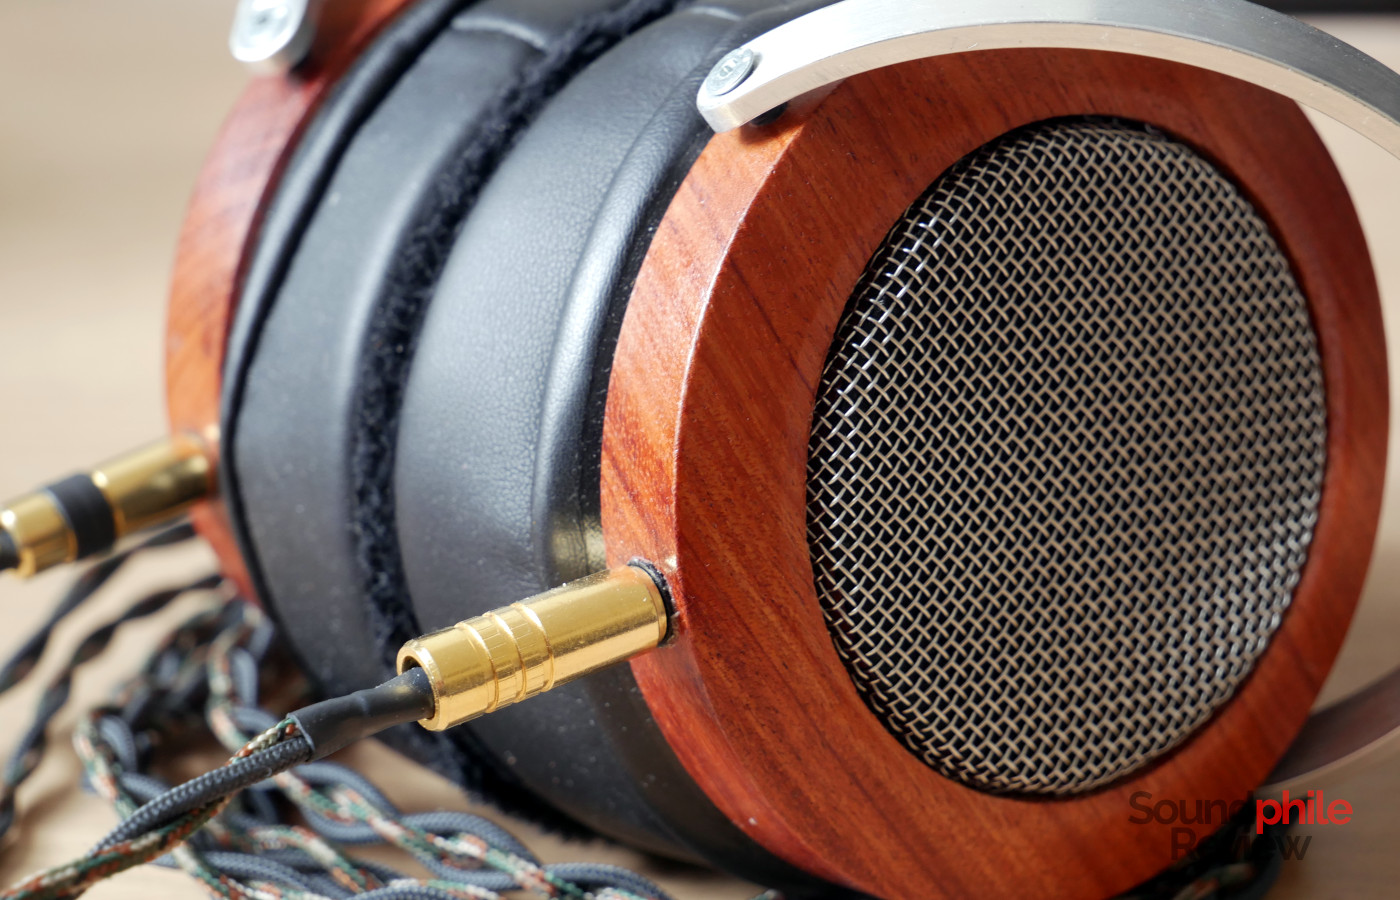 Hyland Headphones Venus earcups are made of wood